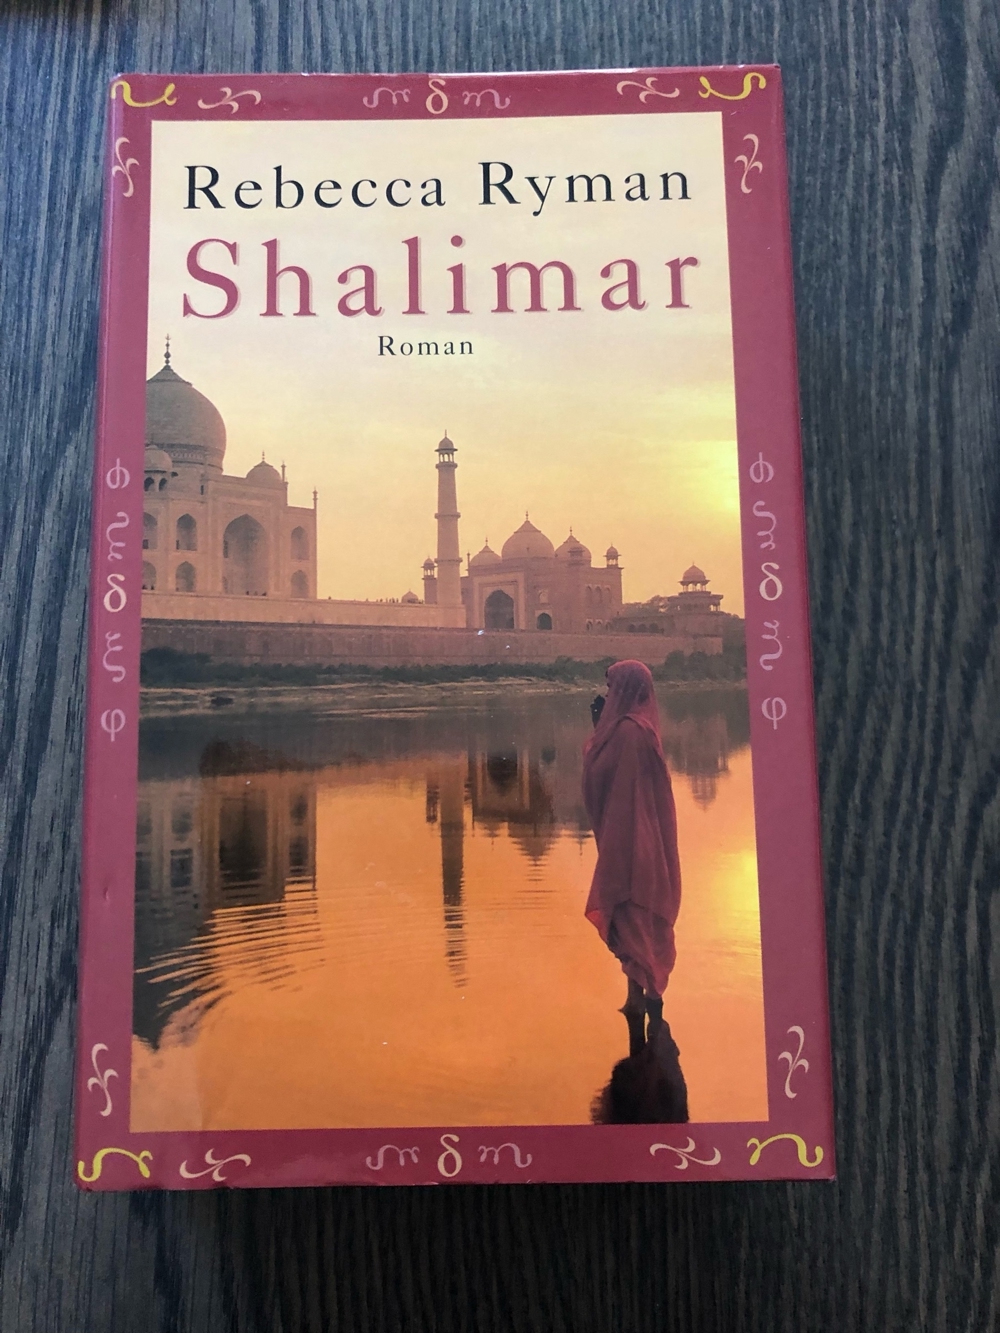 Roman Shalimar, Rebecca Ryman